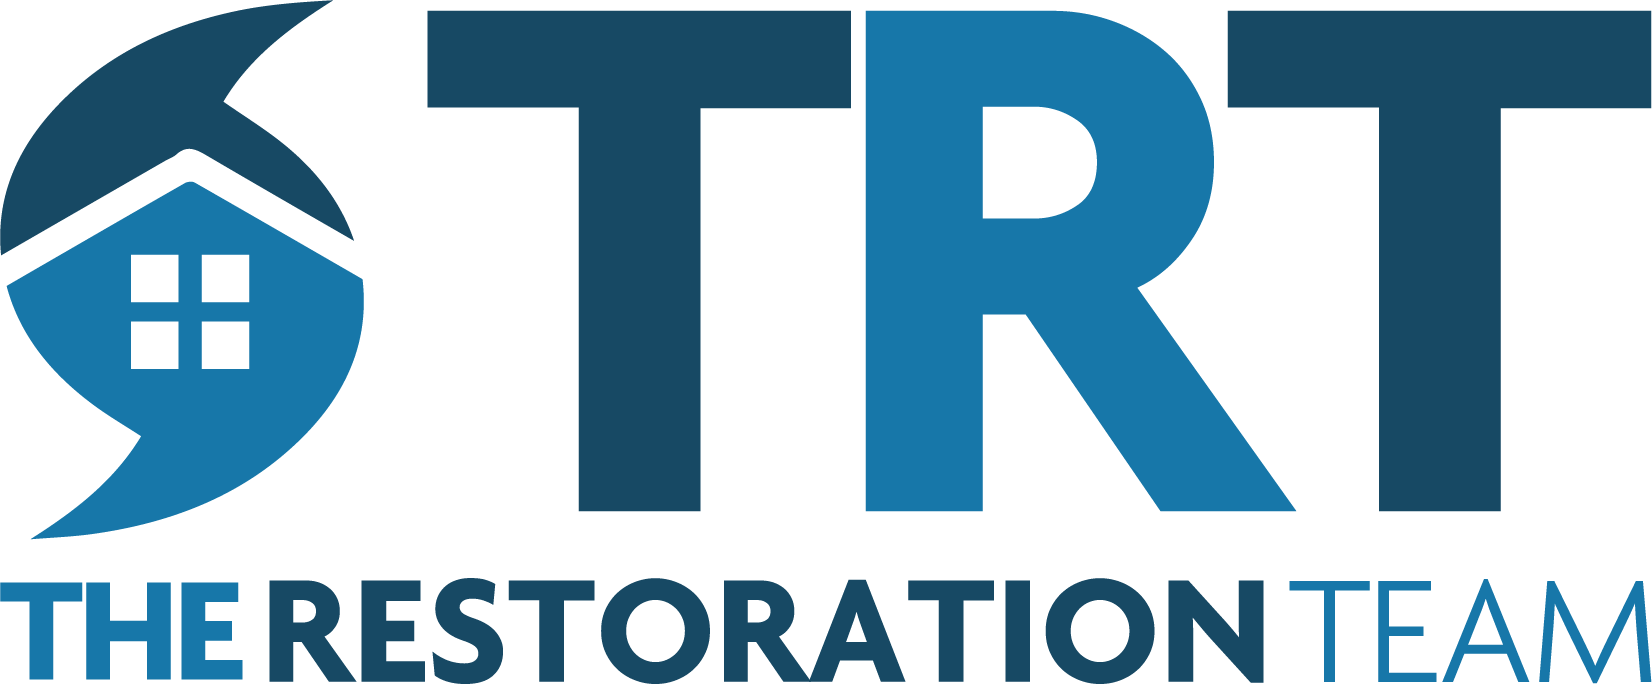 The Restoration Team logo